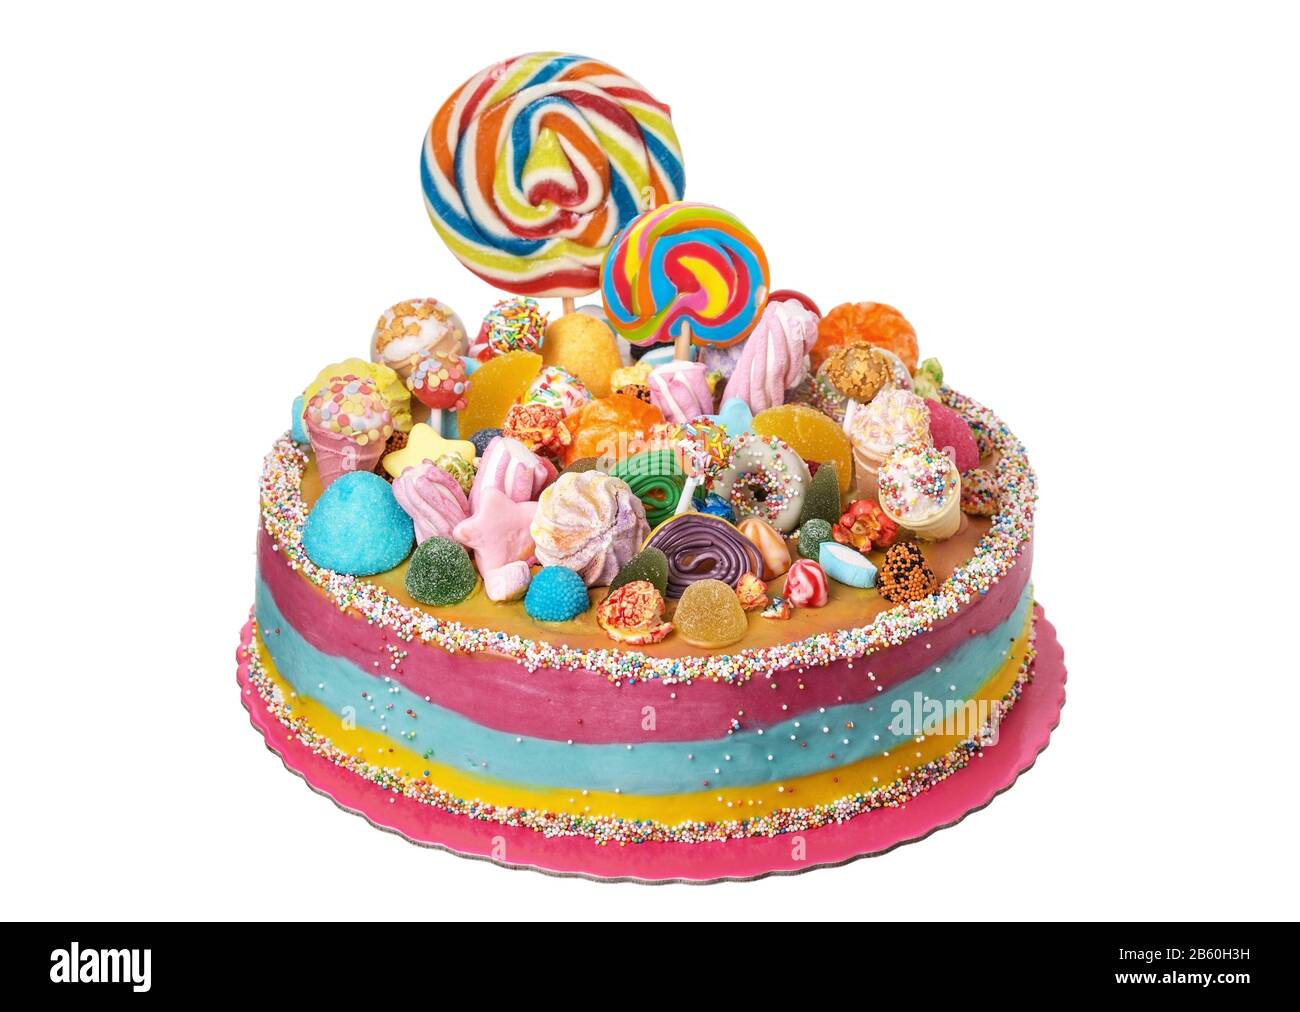 Celebration piñata cake recipe | BBC Good Food